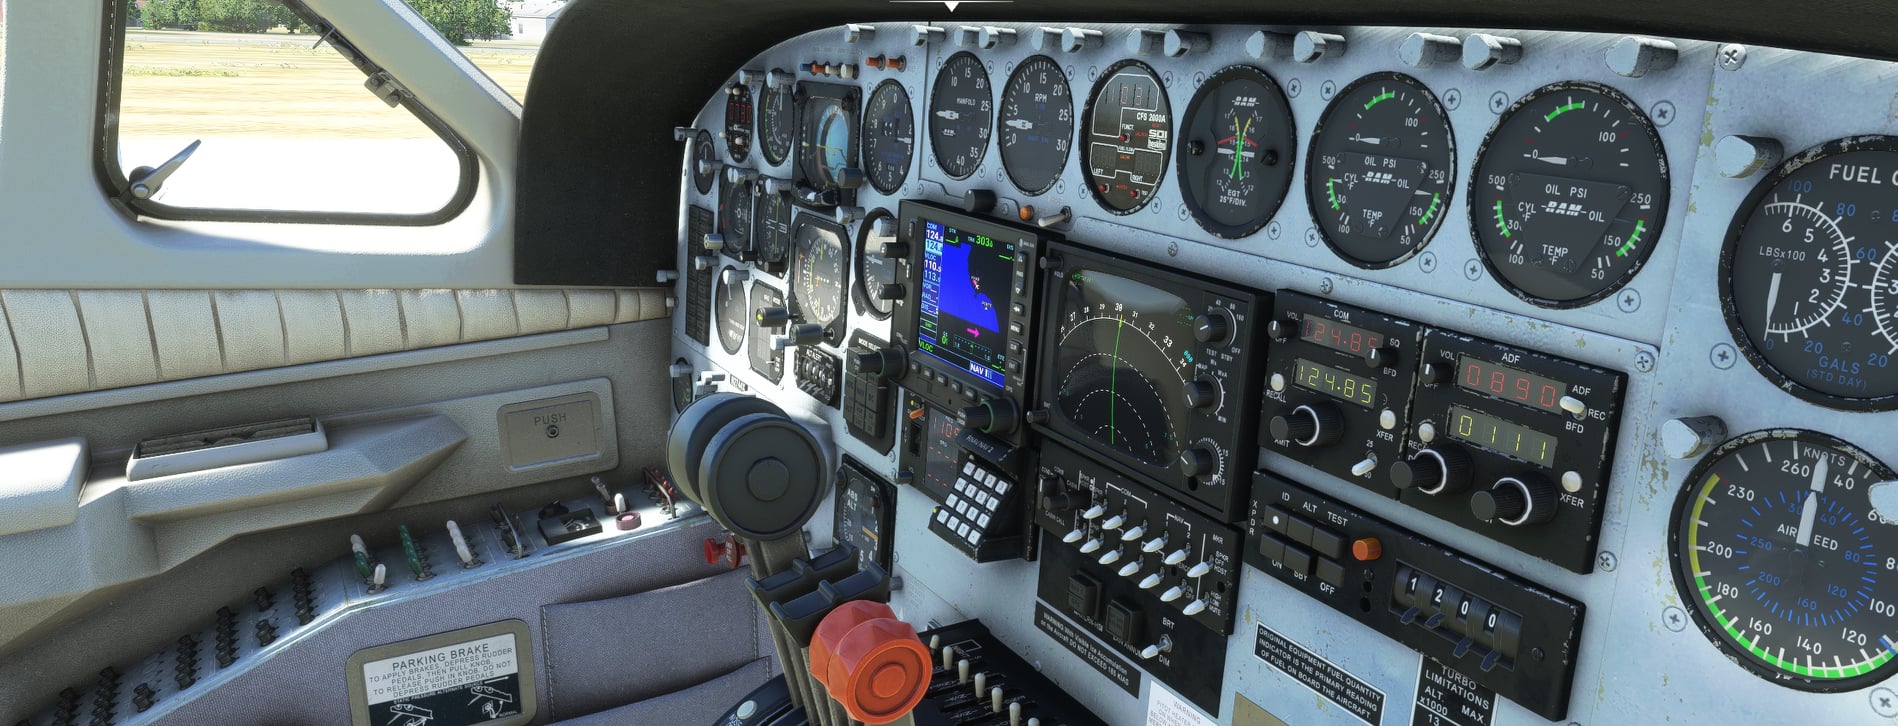 Microsoft Flight Simulator Realisticality - General Off-Topic